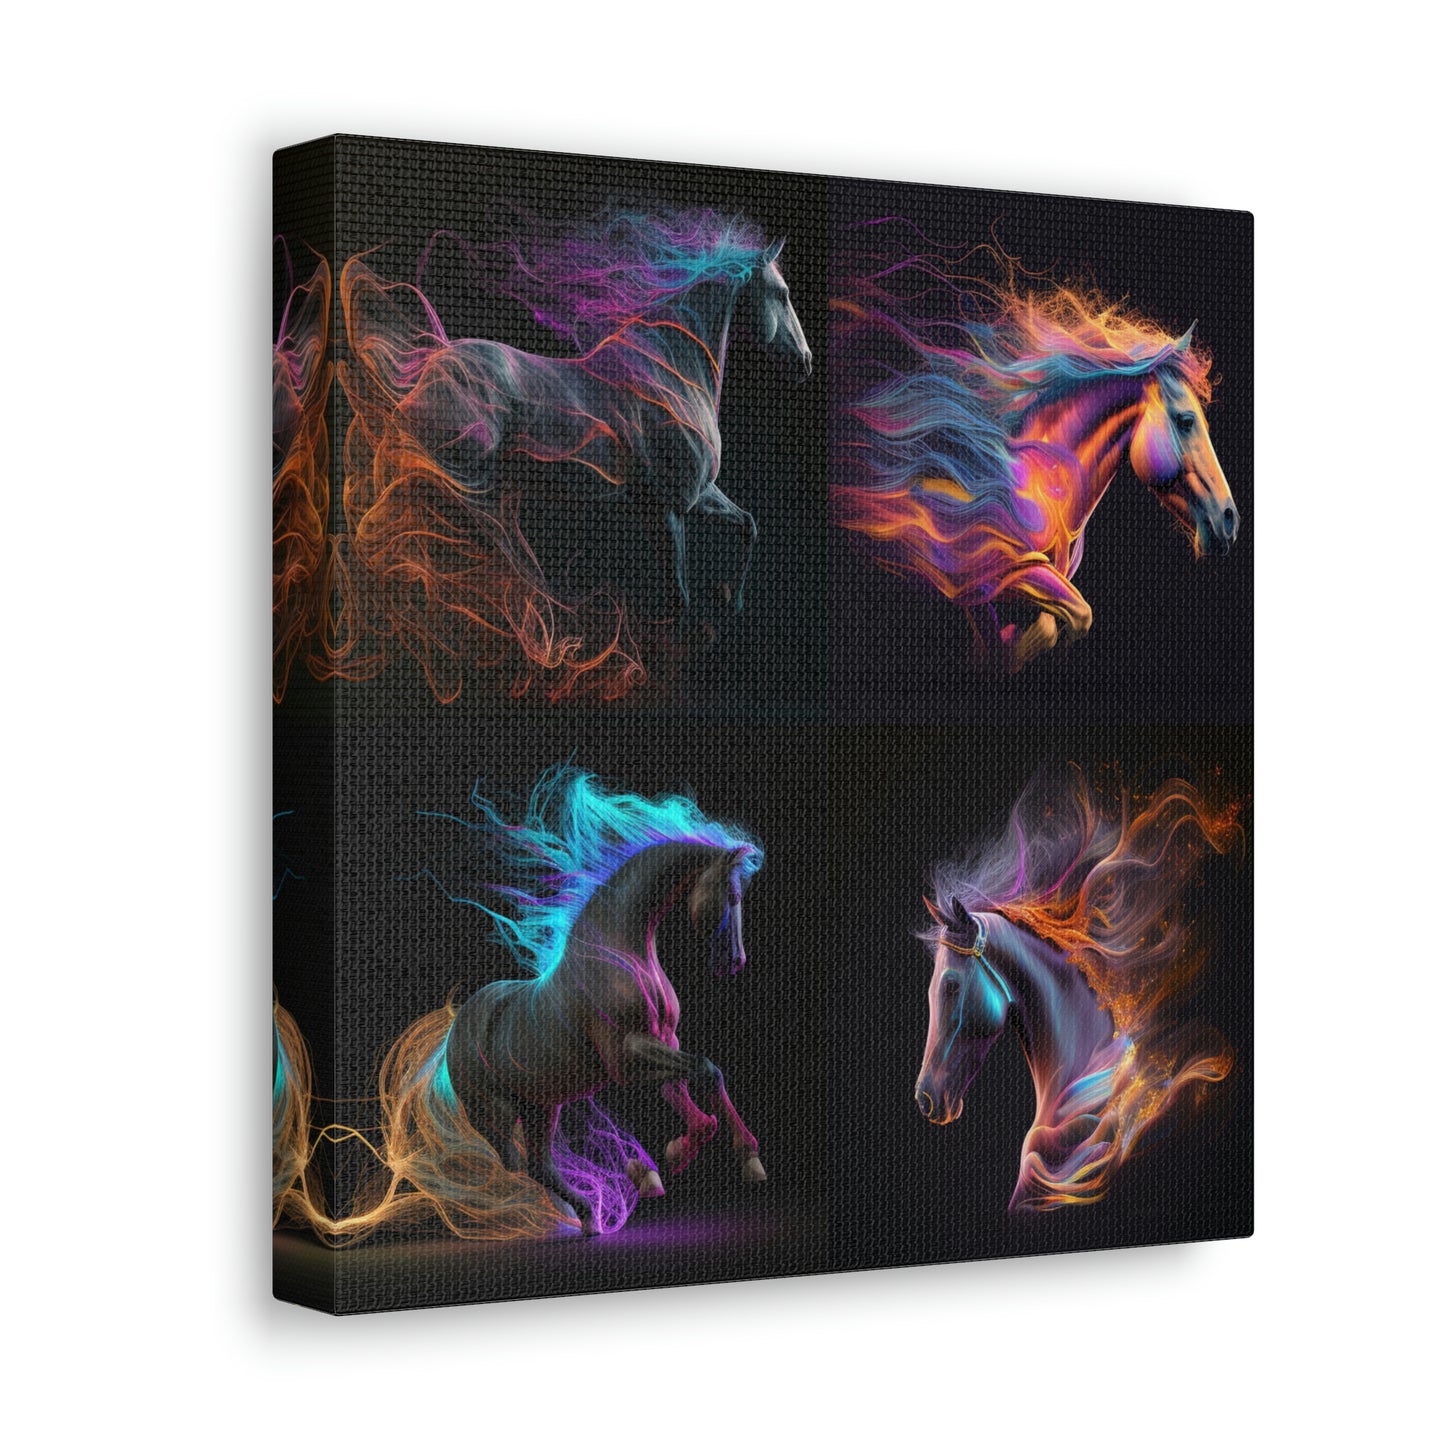 Canvas Gallery Wraps florescent horses mane 4 Pack